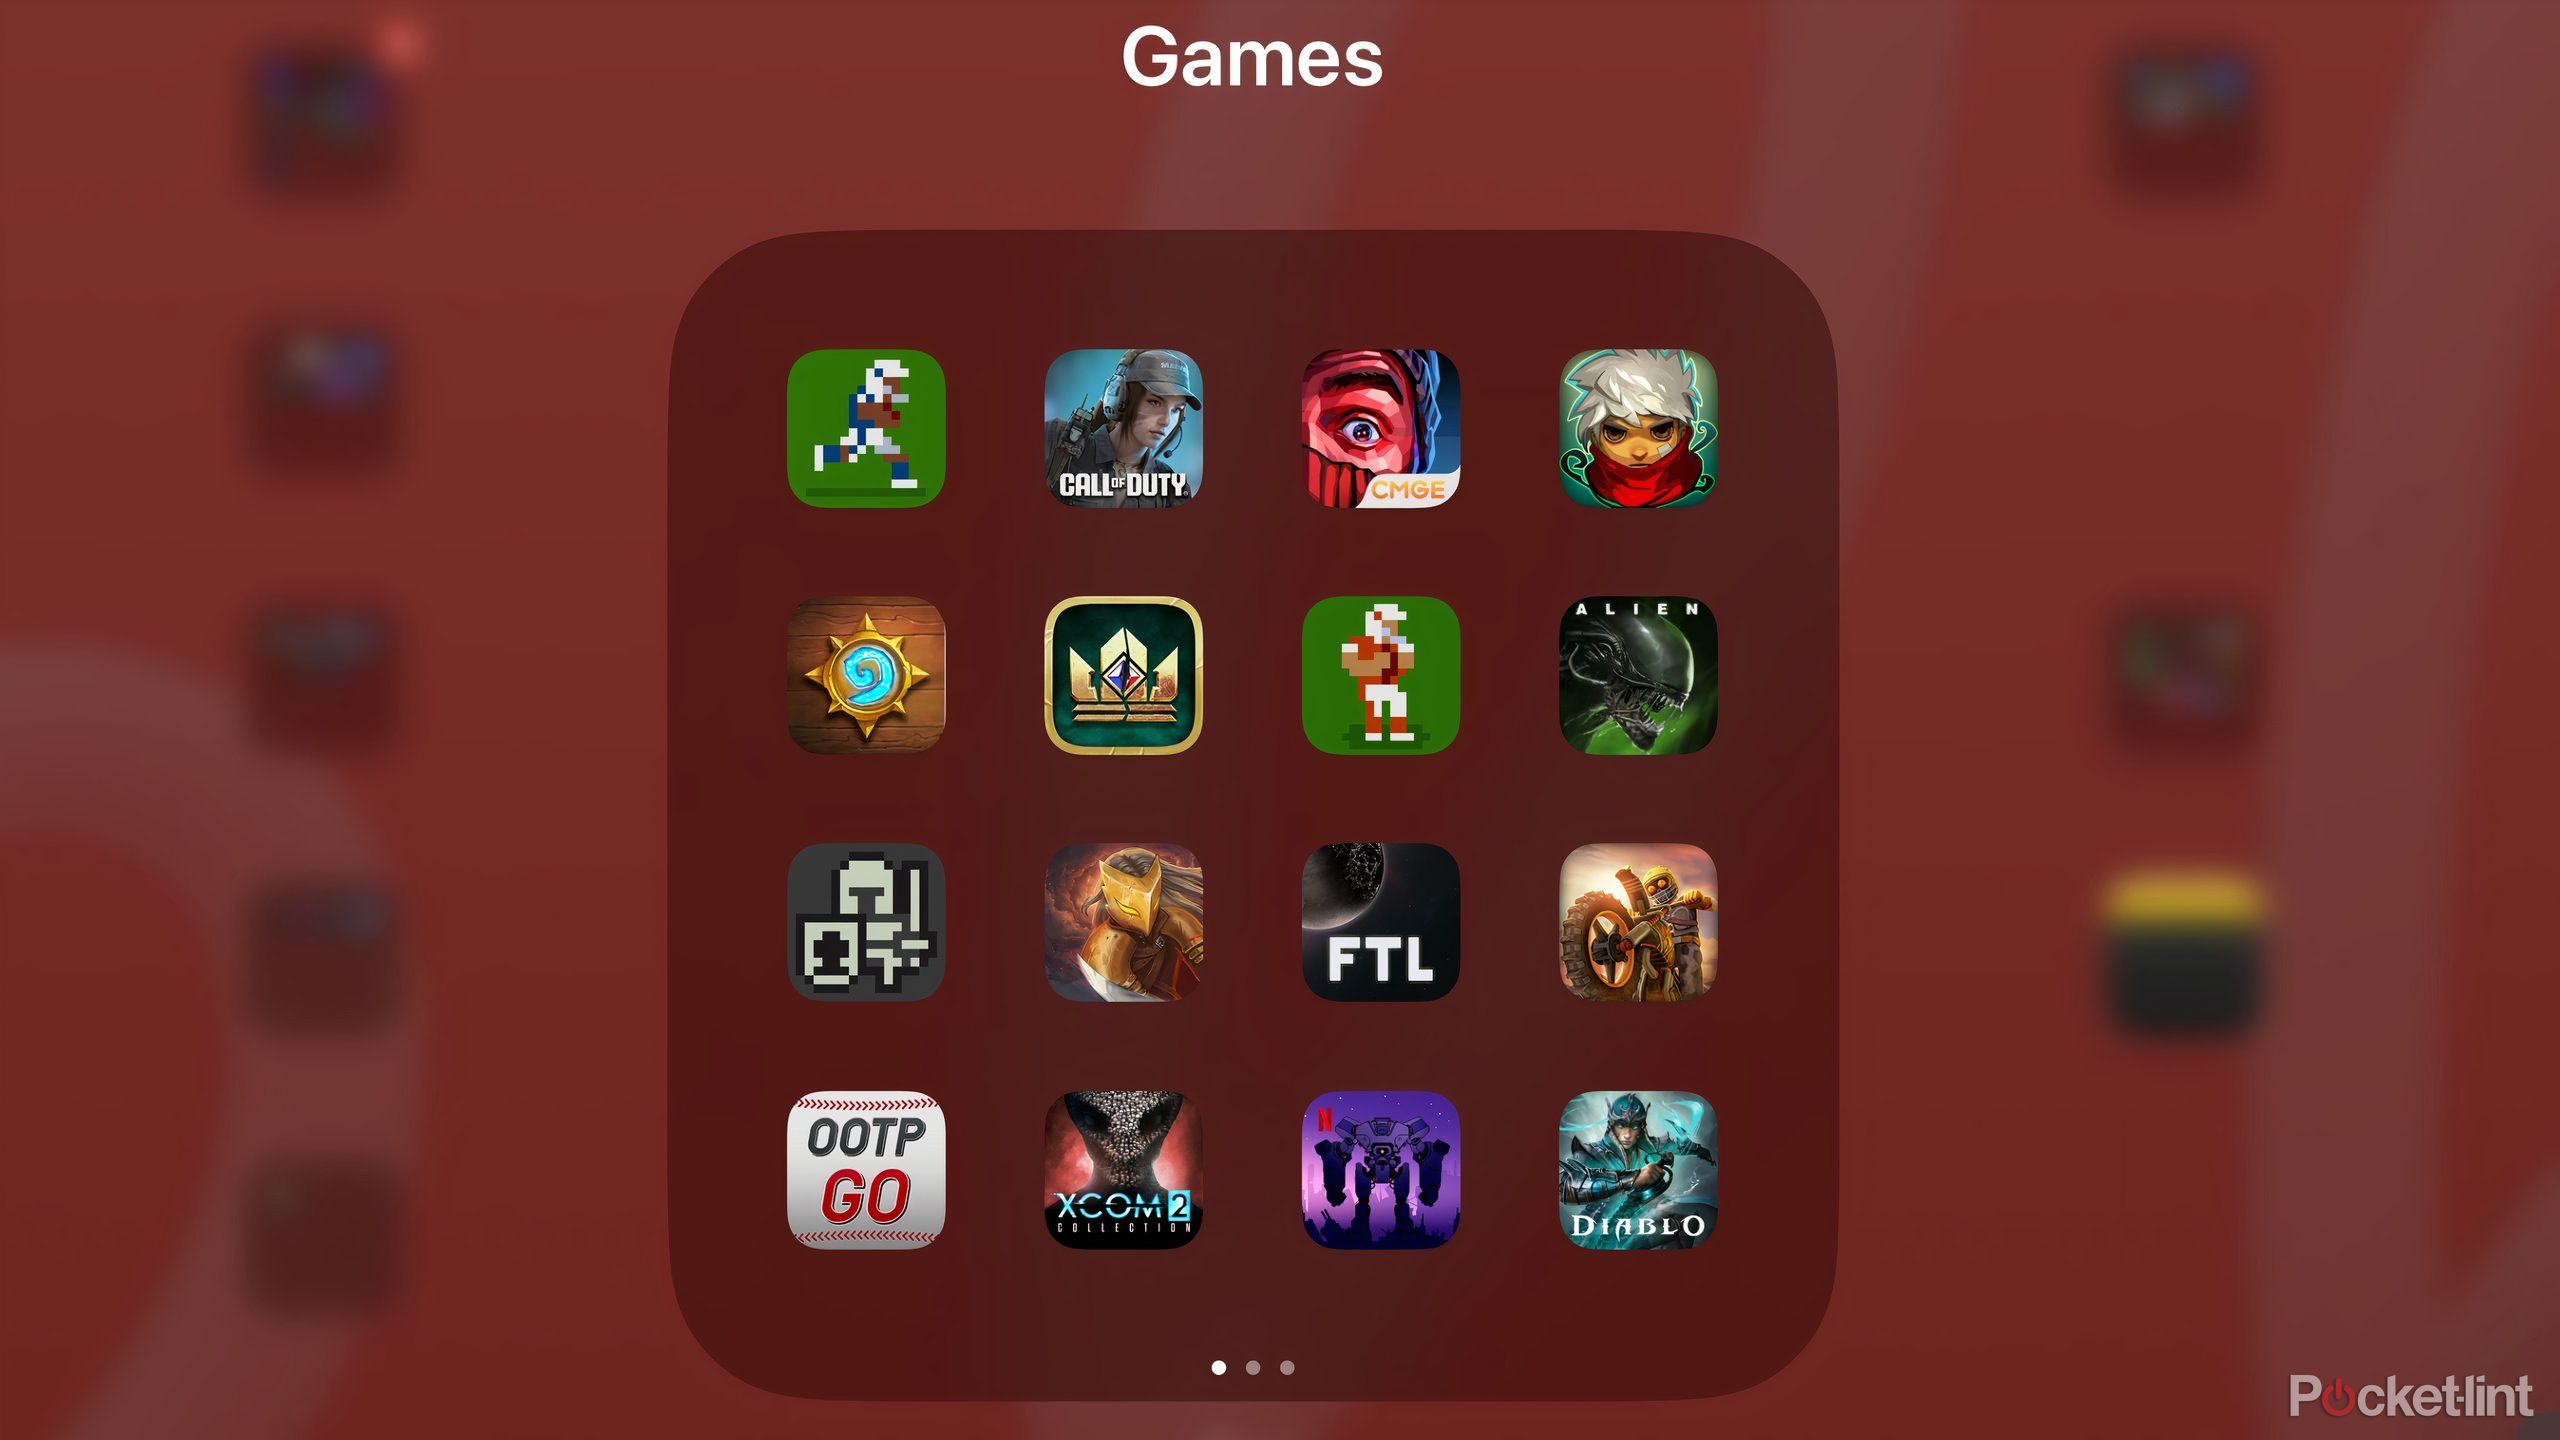 games on the ipad screen